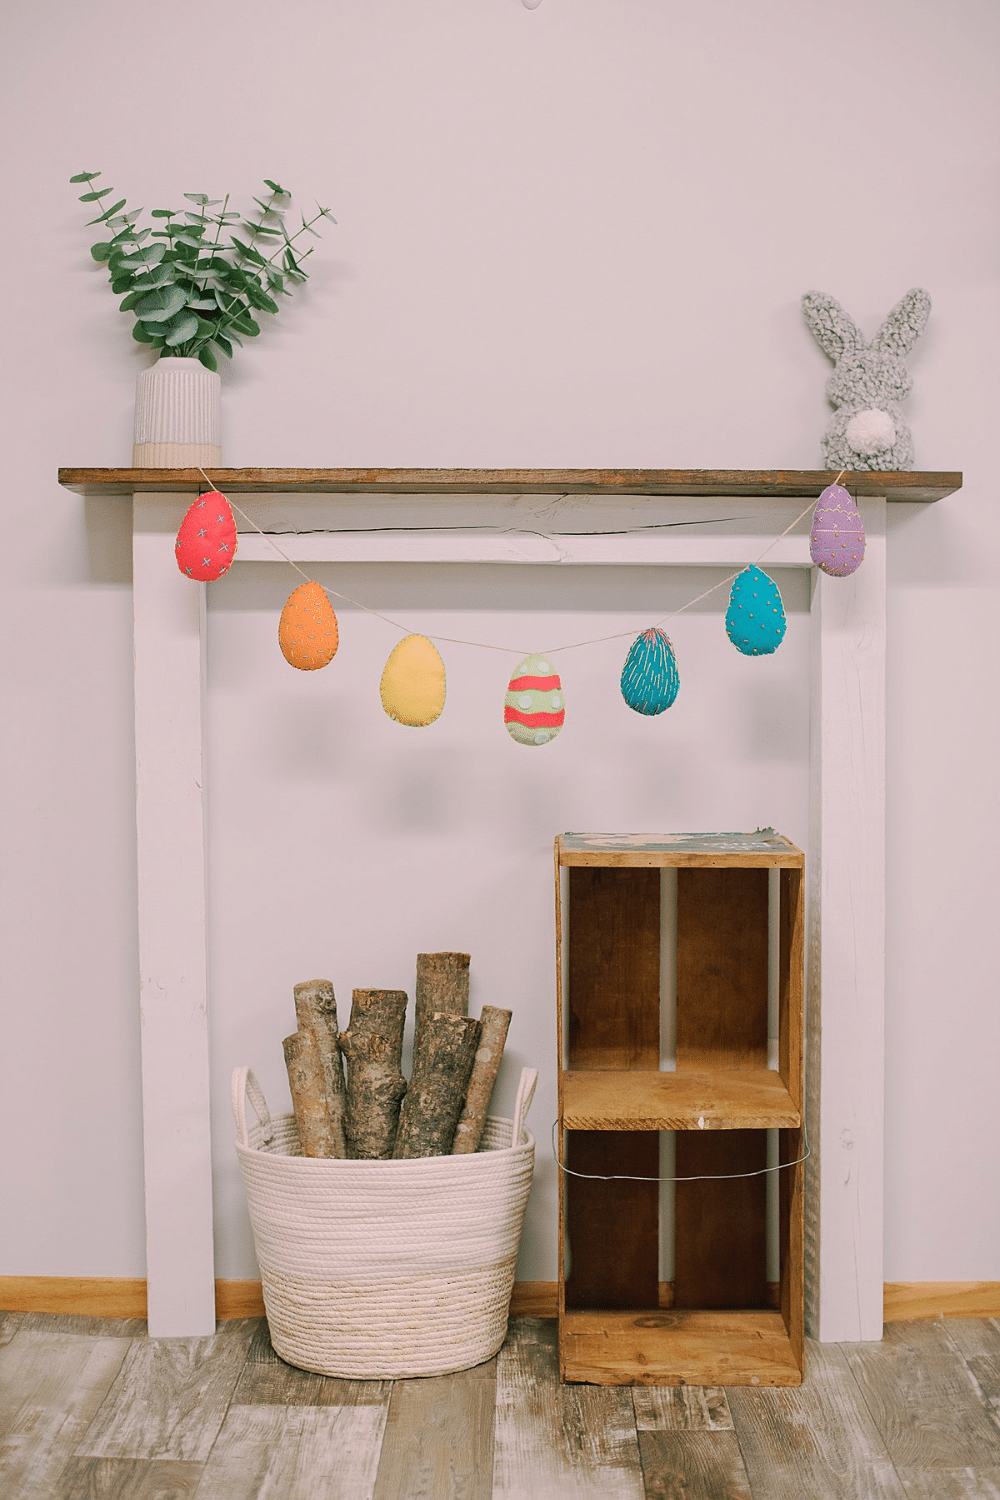 How to Make a Felt Easter Egg Garland